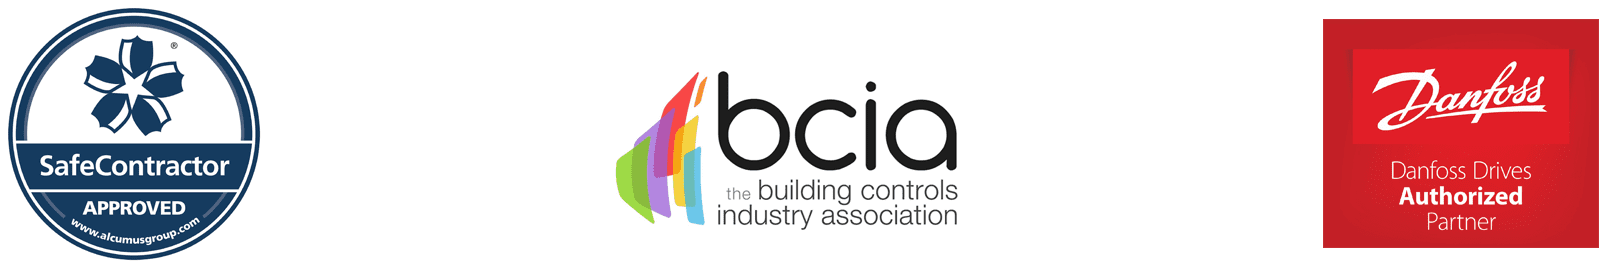 Safe Contractor bcia Danfoss authorized partner